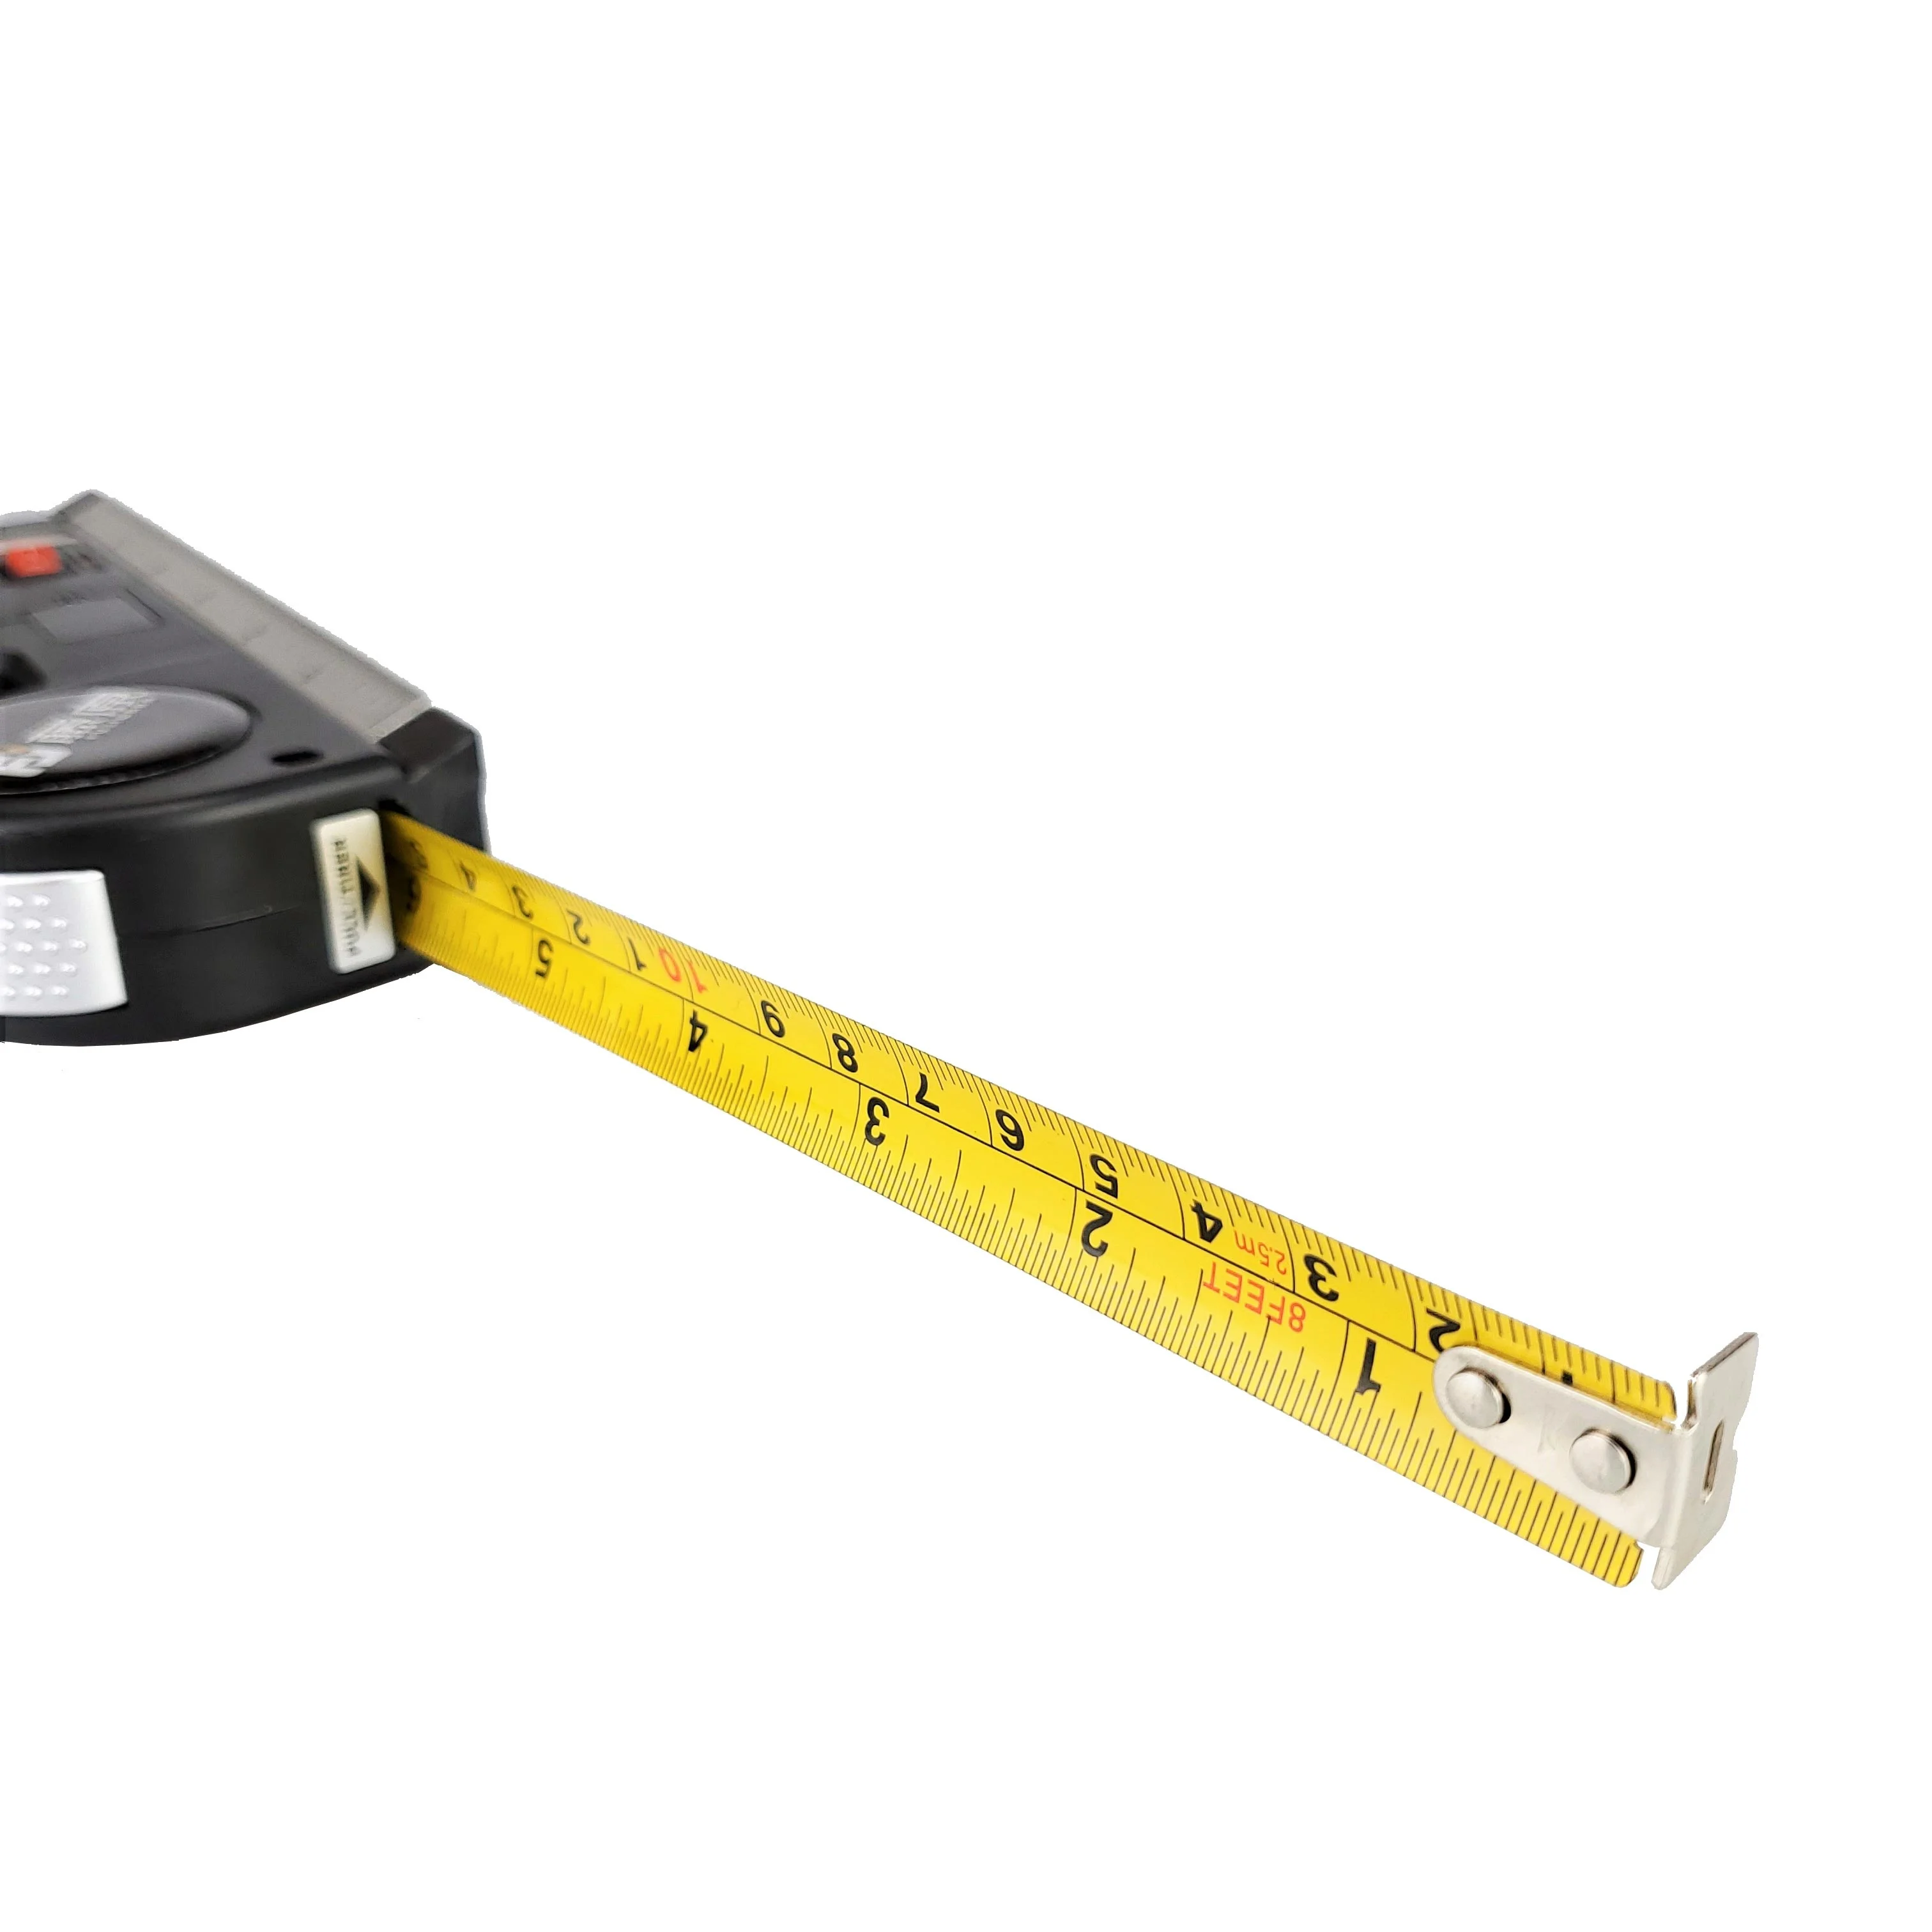 
Cheap price Multipurpose laser Level Measure Line 8ft+ Cross Line Laser Level Adjusted and Metric Rulers Laser Level 